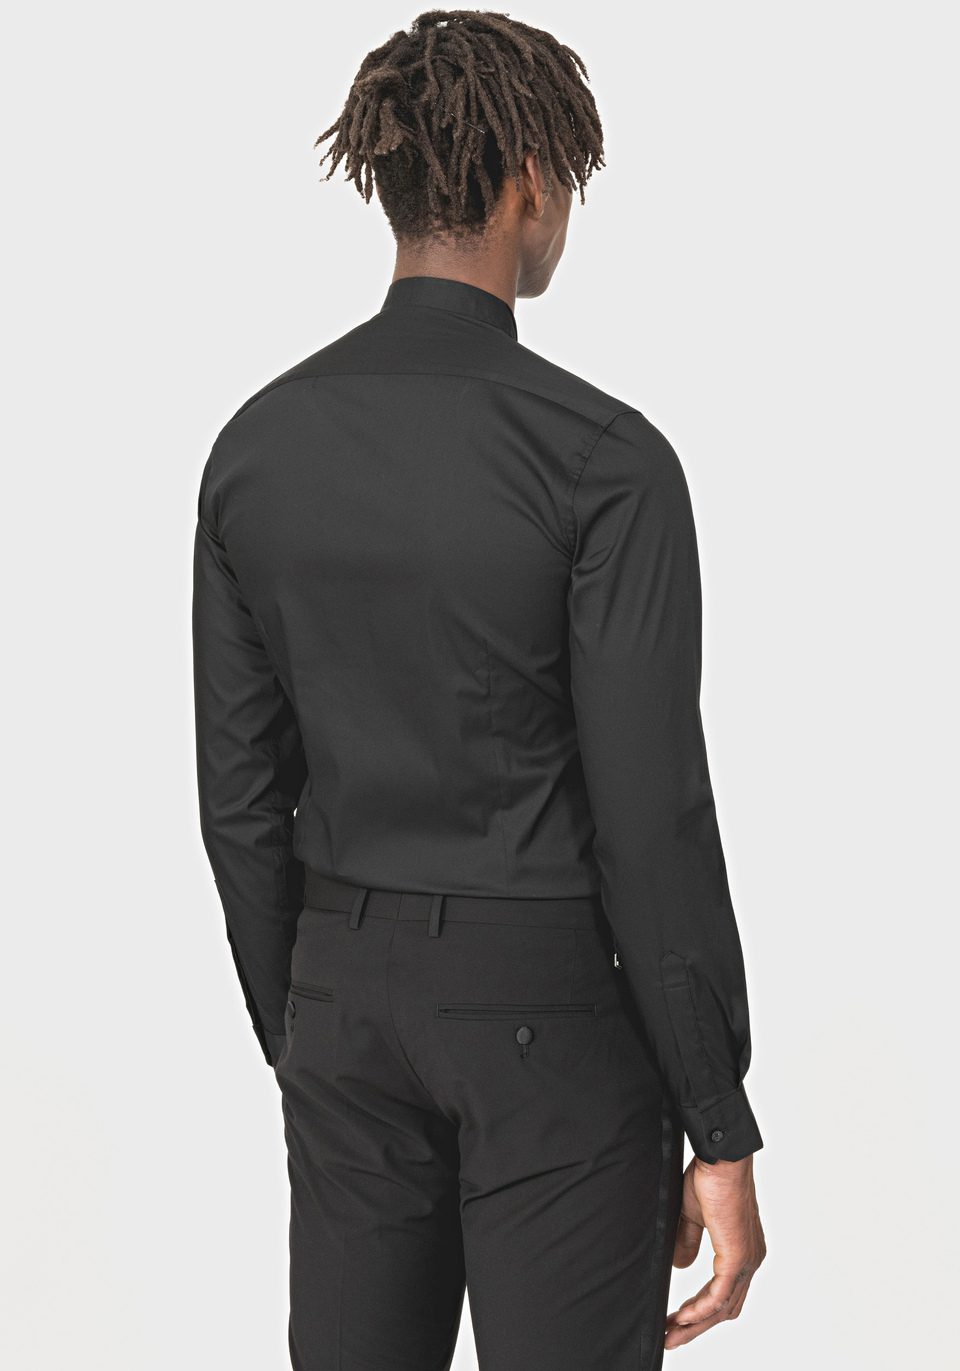 Formal shirt - Antony Morato Online Shop